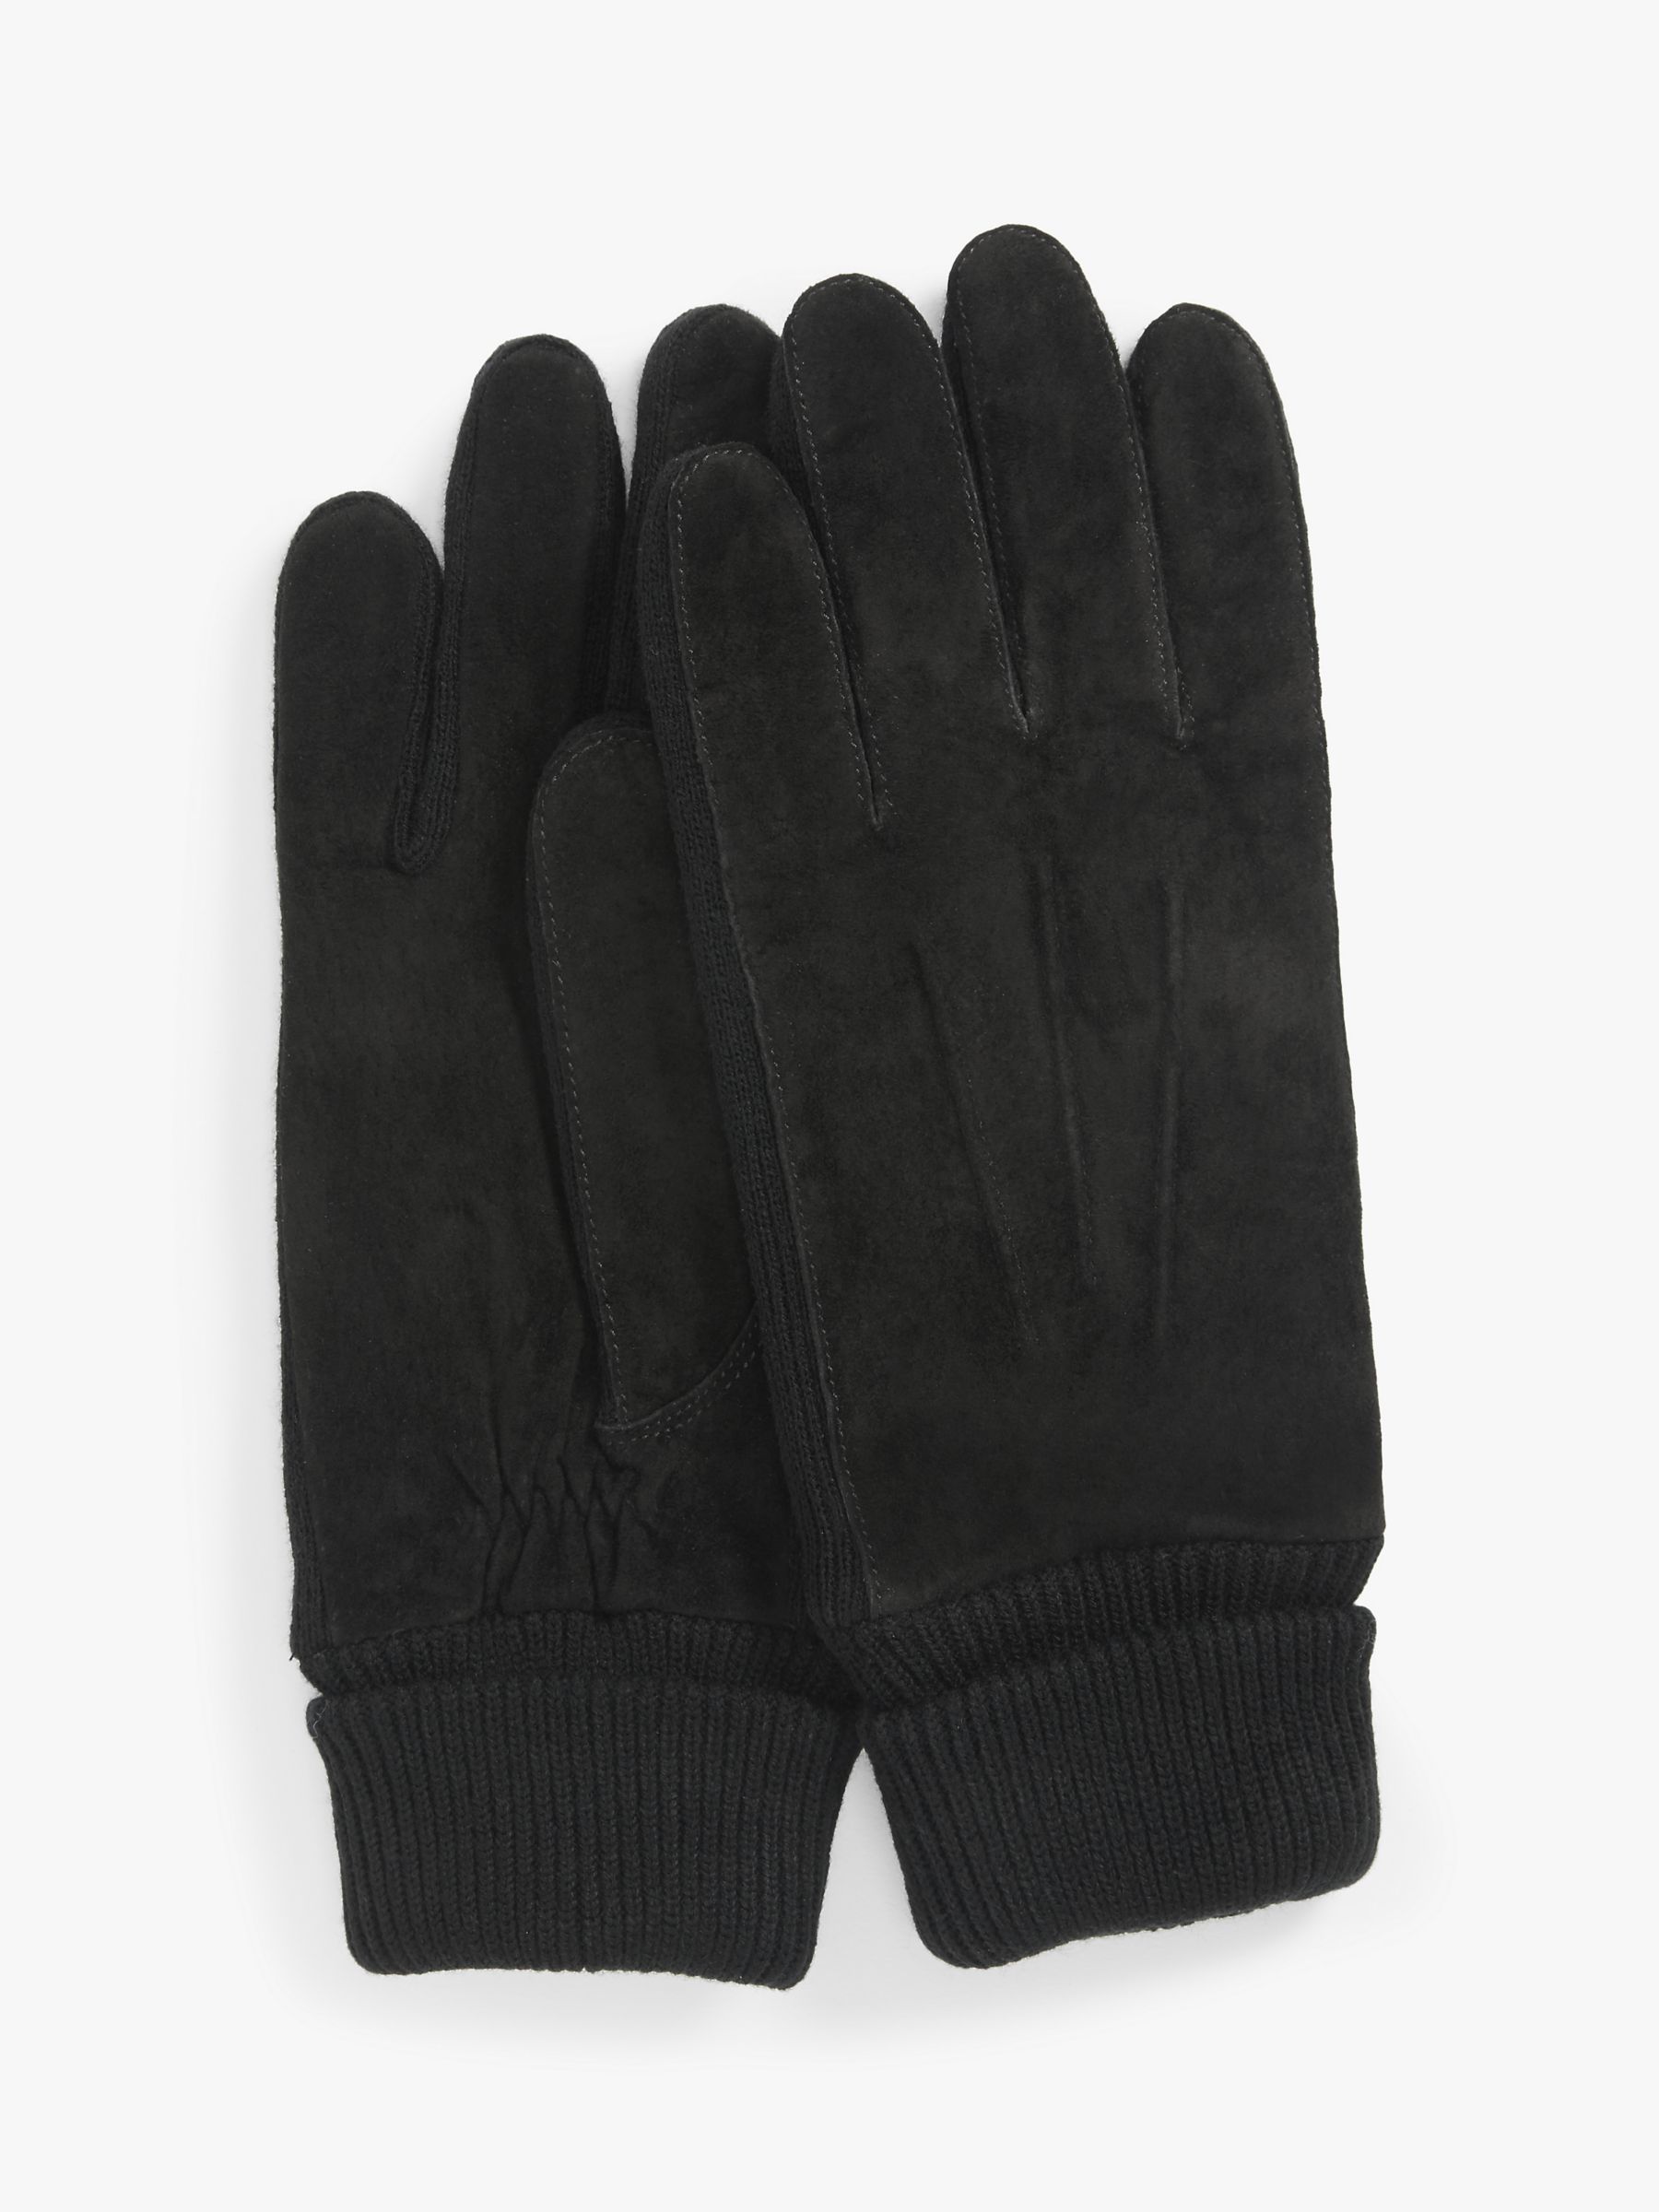 John Lewis Suede Knit Gloves, Black, S